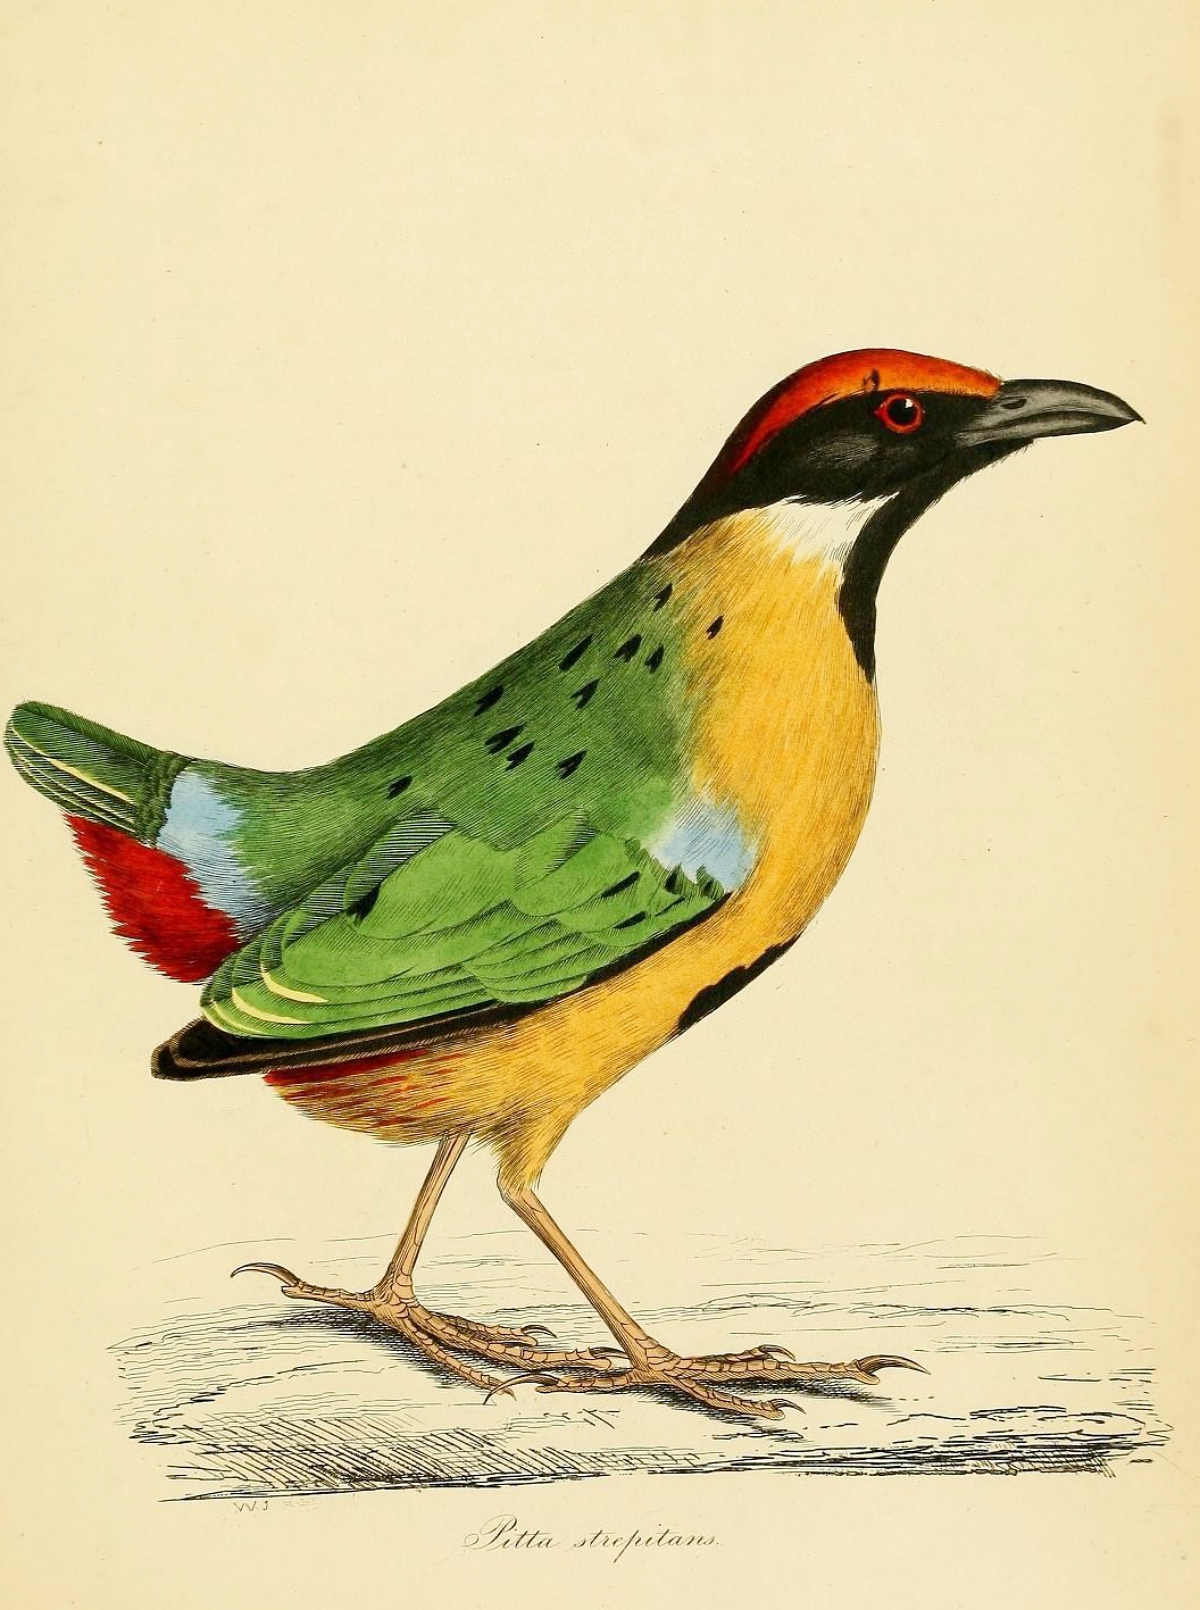 1835 ornithology book containing arsenic green illustrations